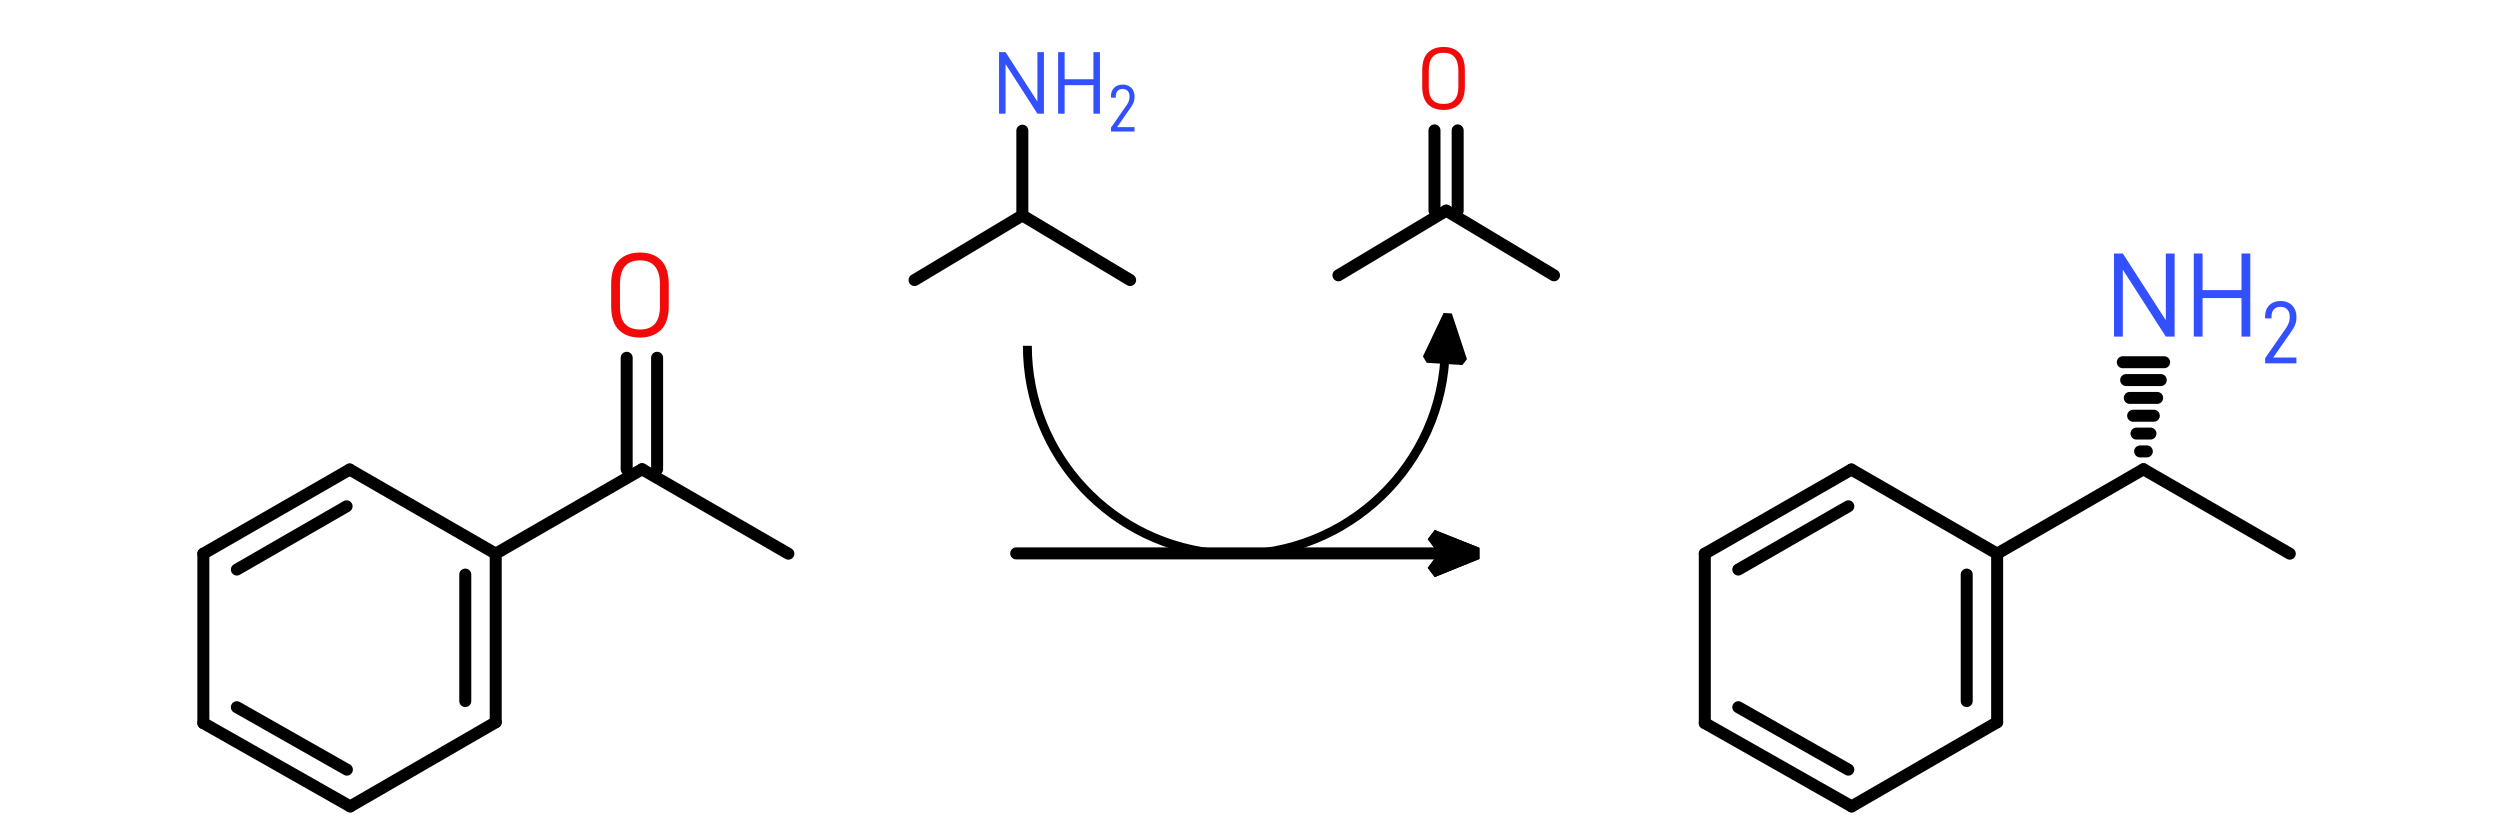 (R)-Phenylethyl amine synthesis